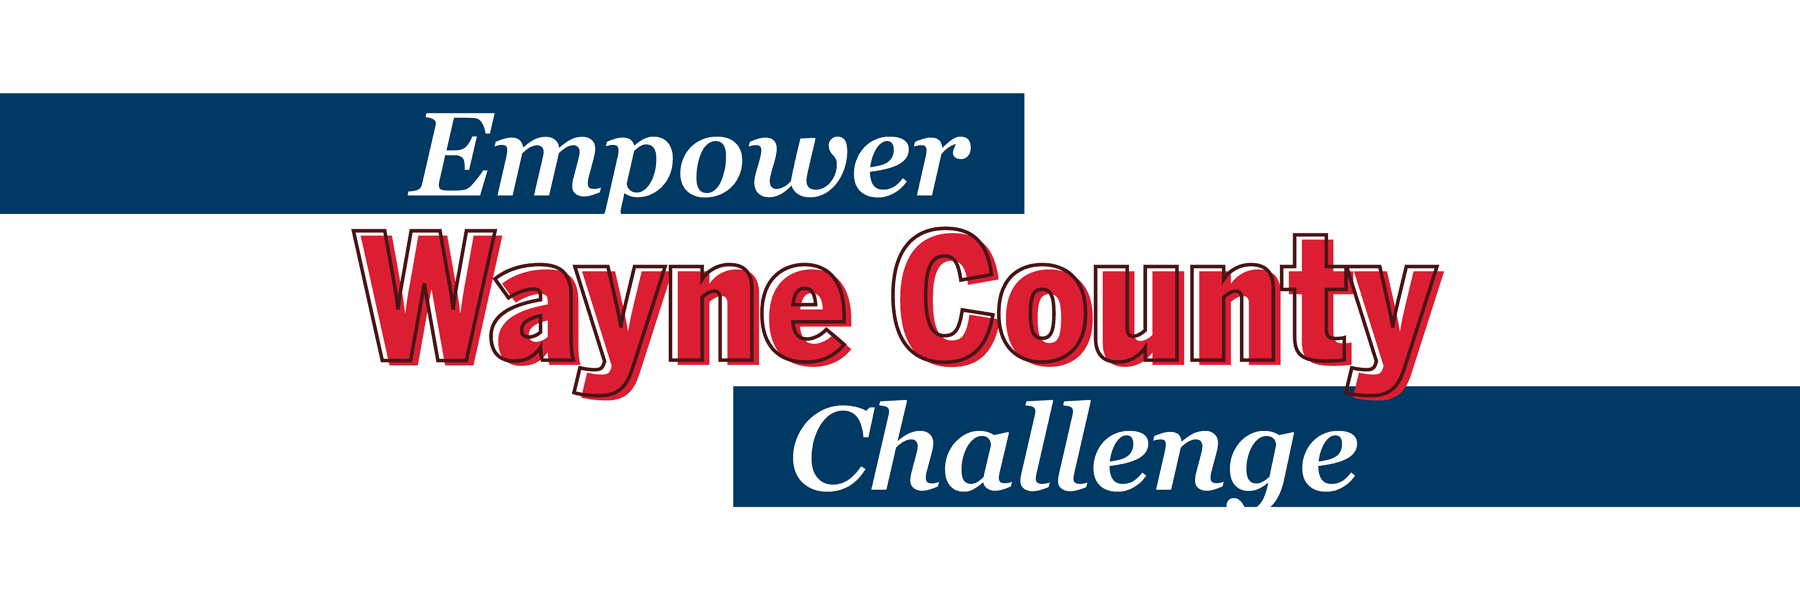 Empower Wayne County Challenge.